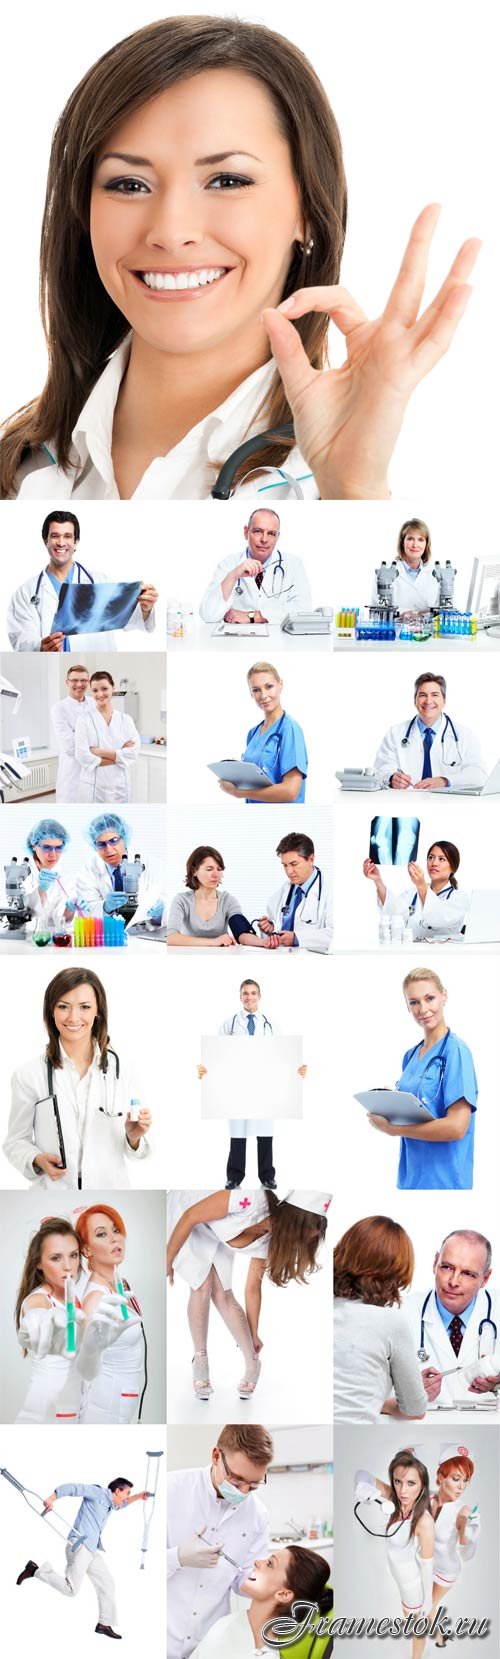 Medical professionals stock photos